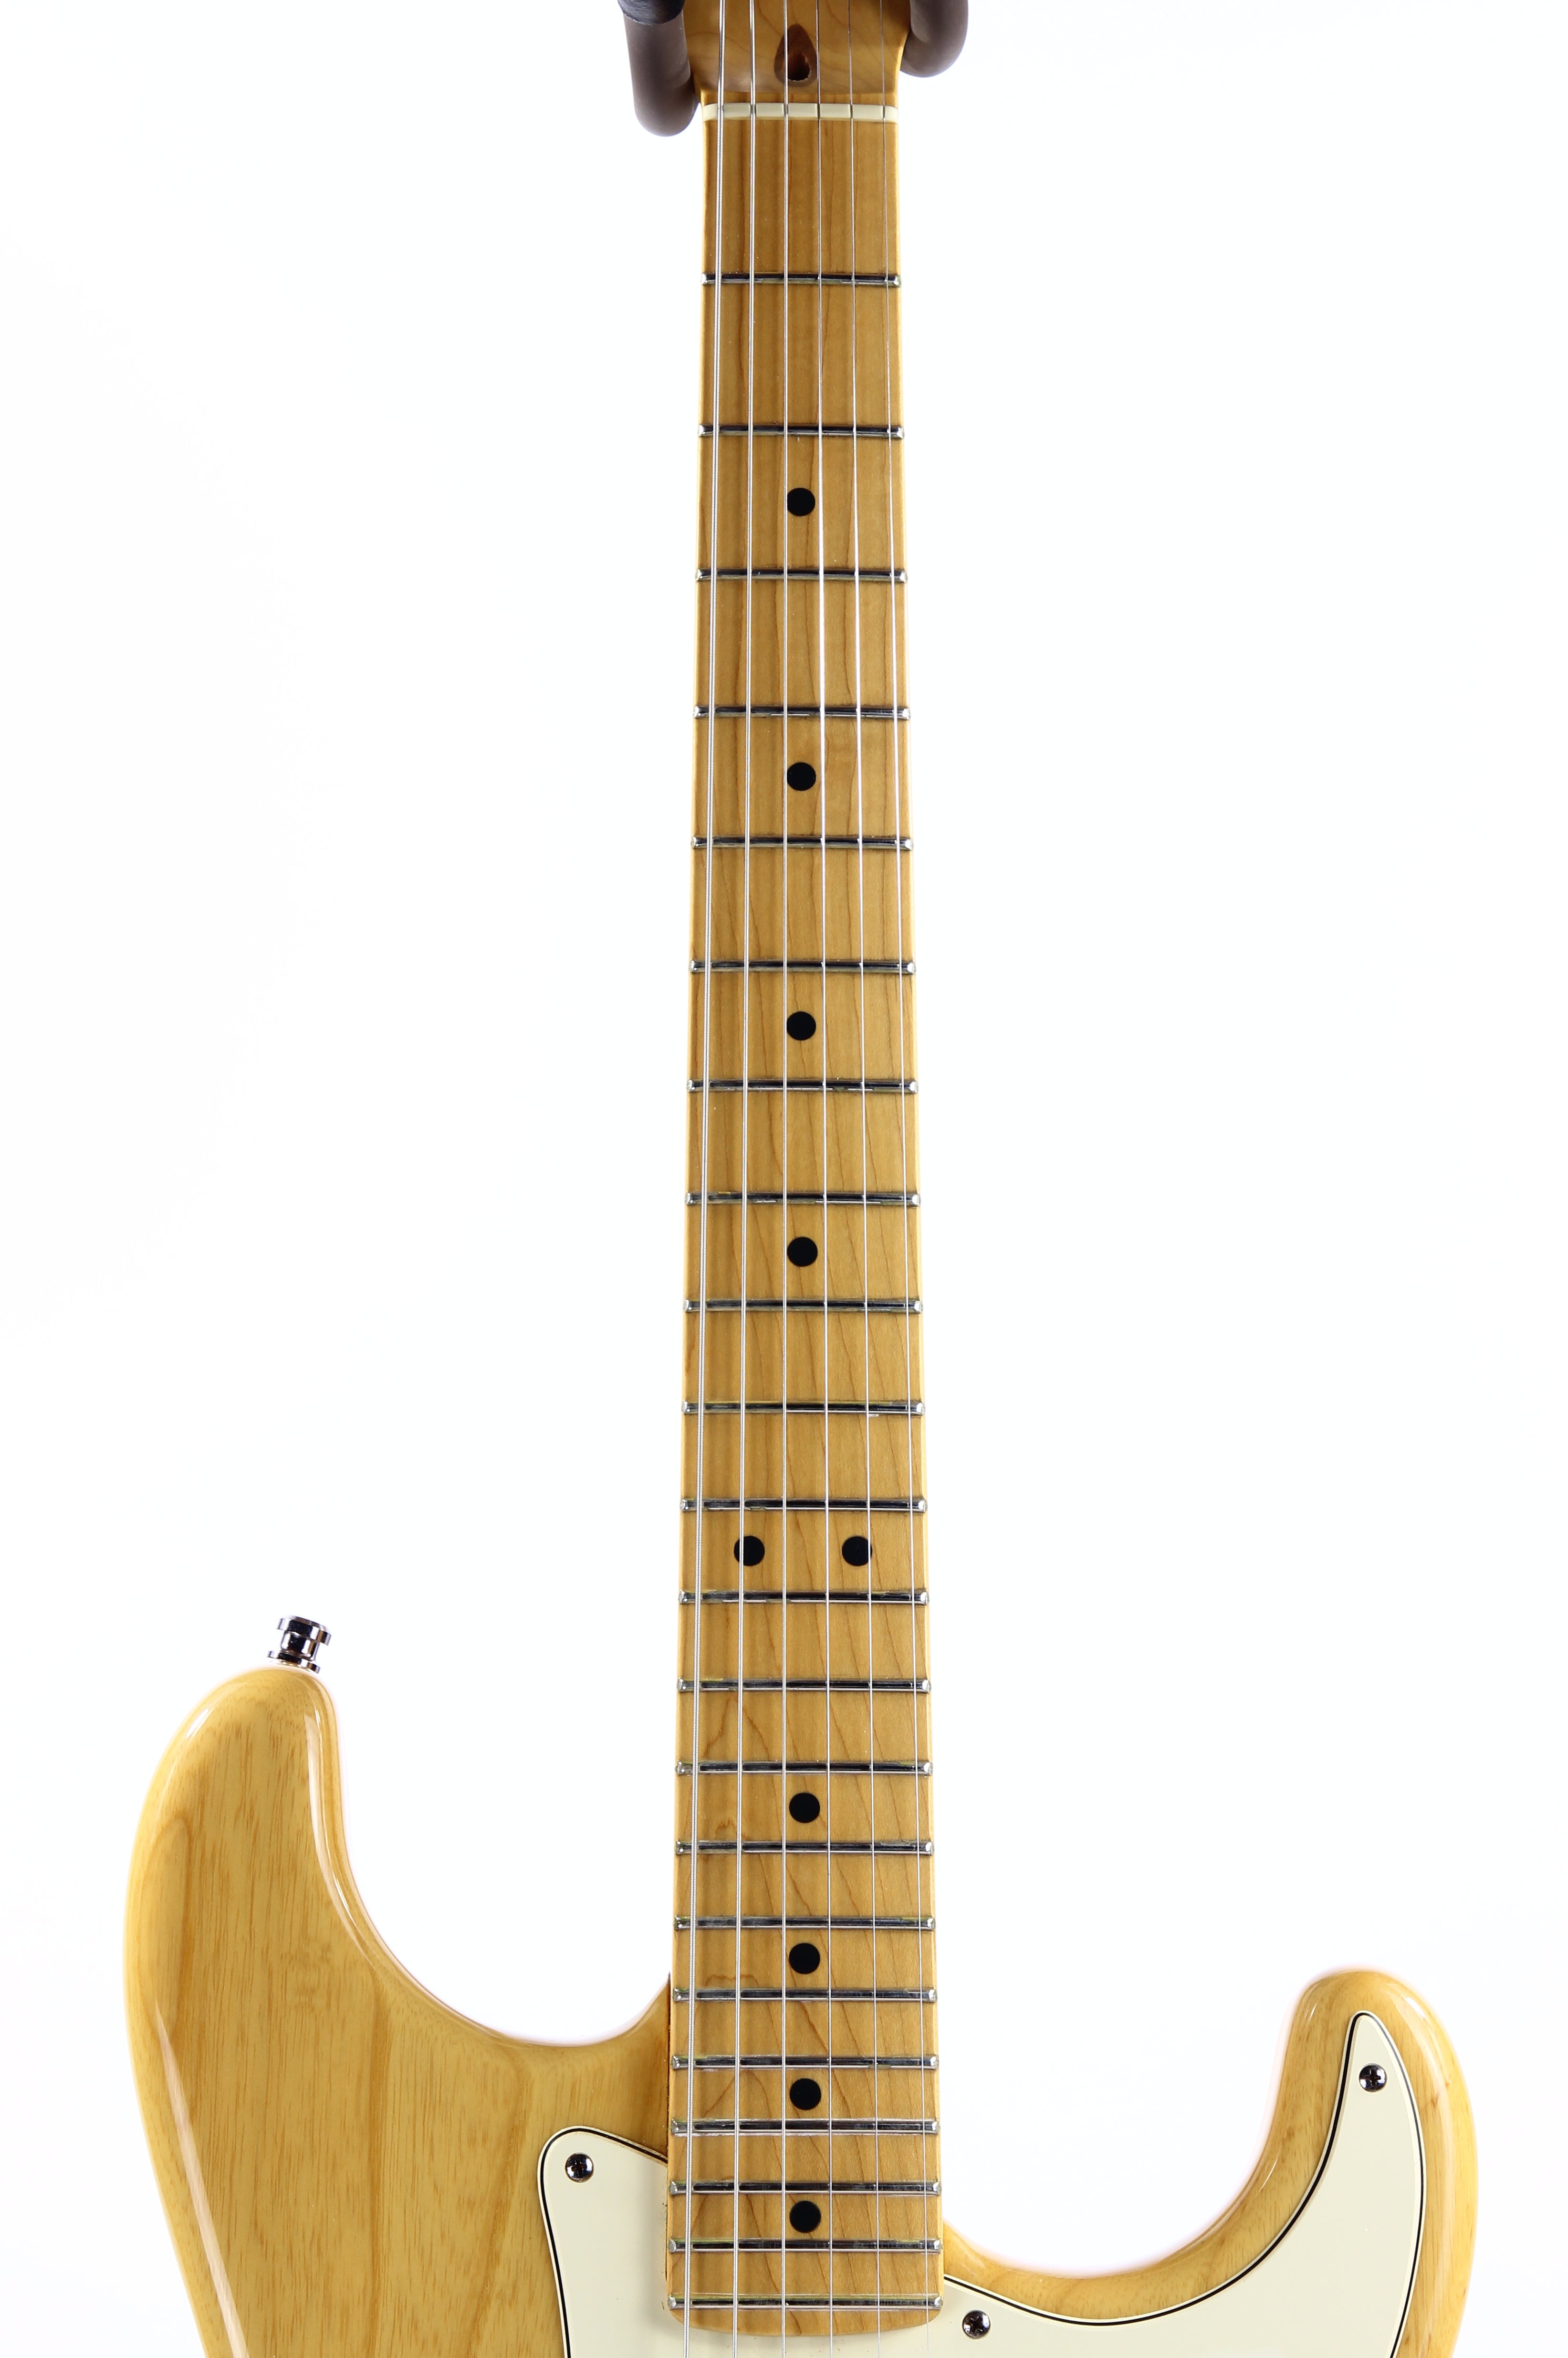 2001 Fender American Standard Stratocaster USA - Natural ASH Body 